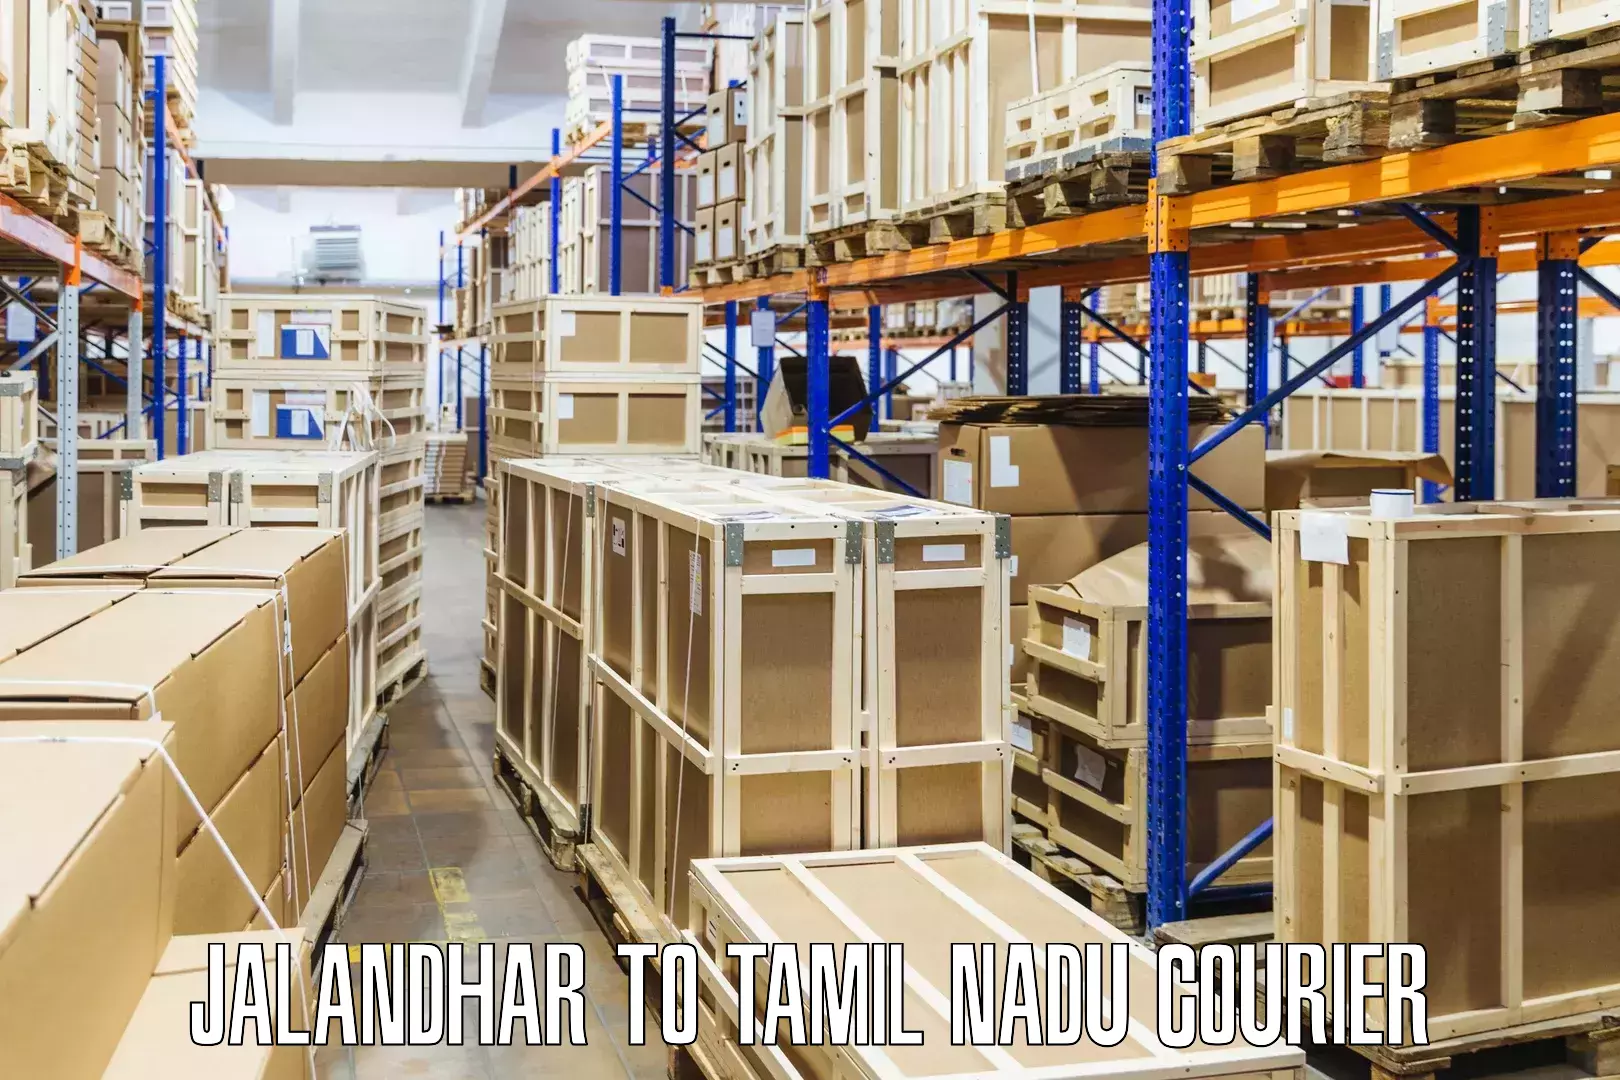 Customizable delivery plans Jalandhar to Batlagundu